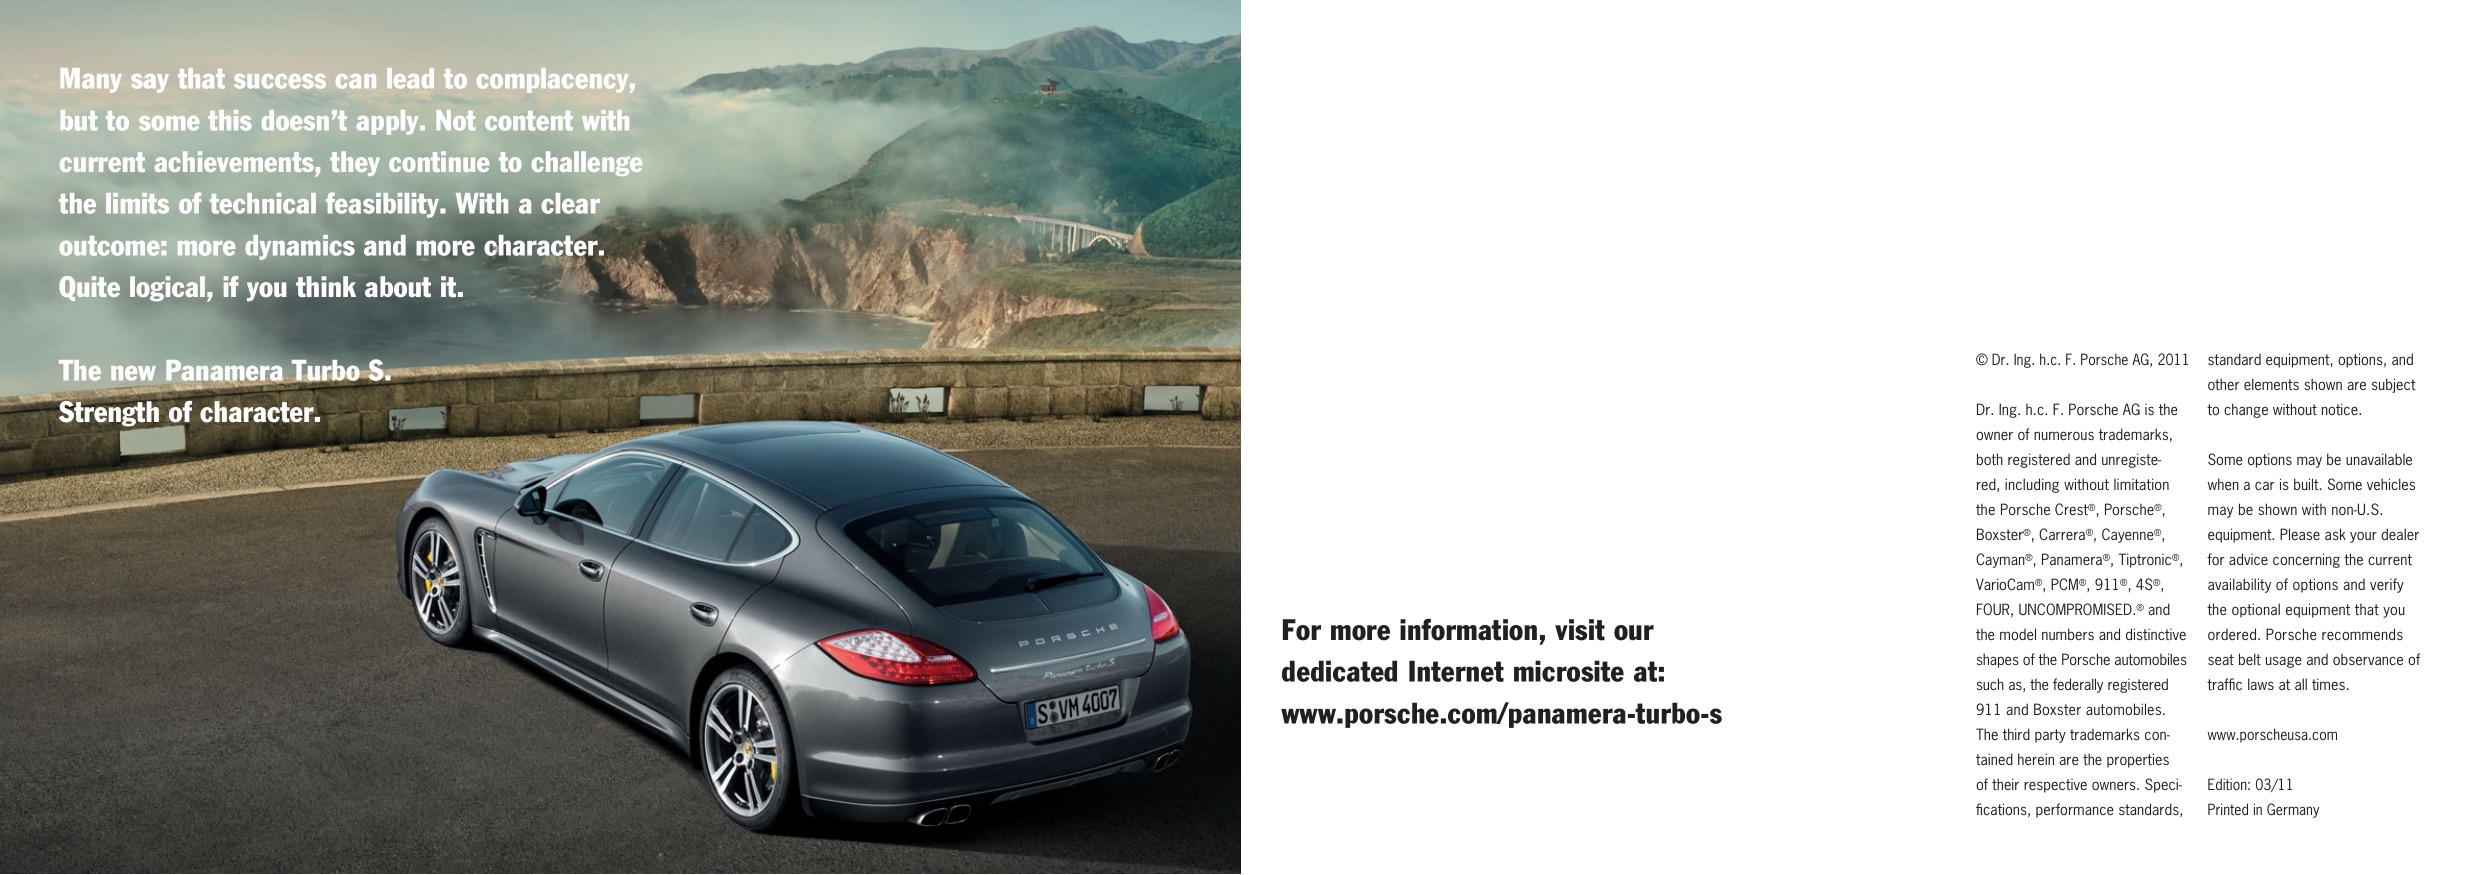 2012 Porsche Panamera Turbo Brochure Page 10